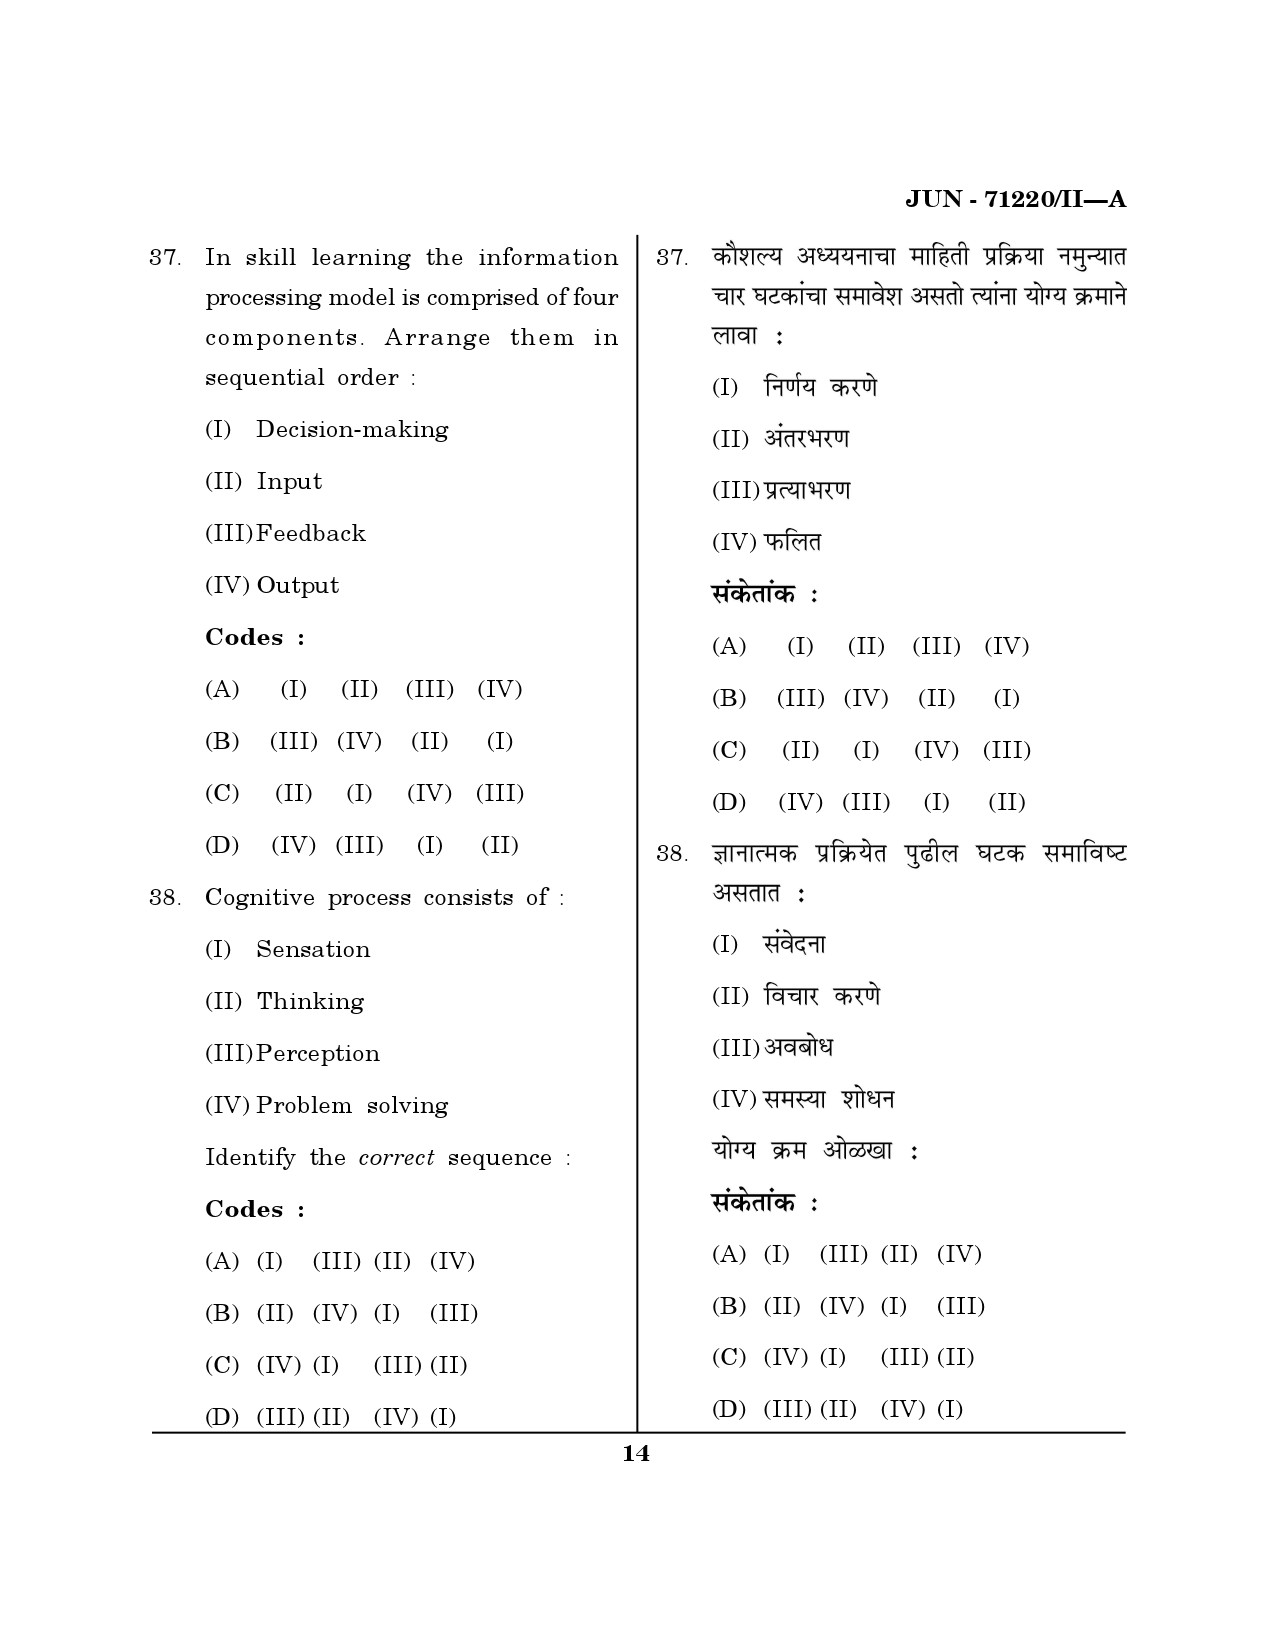 Maharashtra SET Physical Education Question Paper II June 2020 13